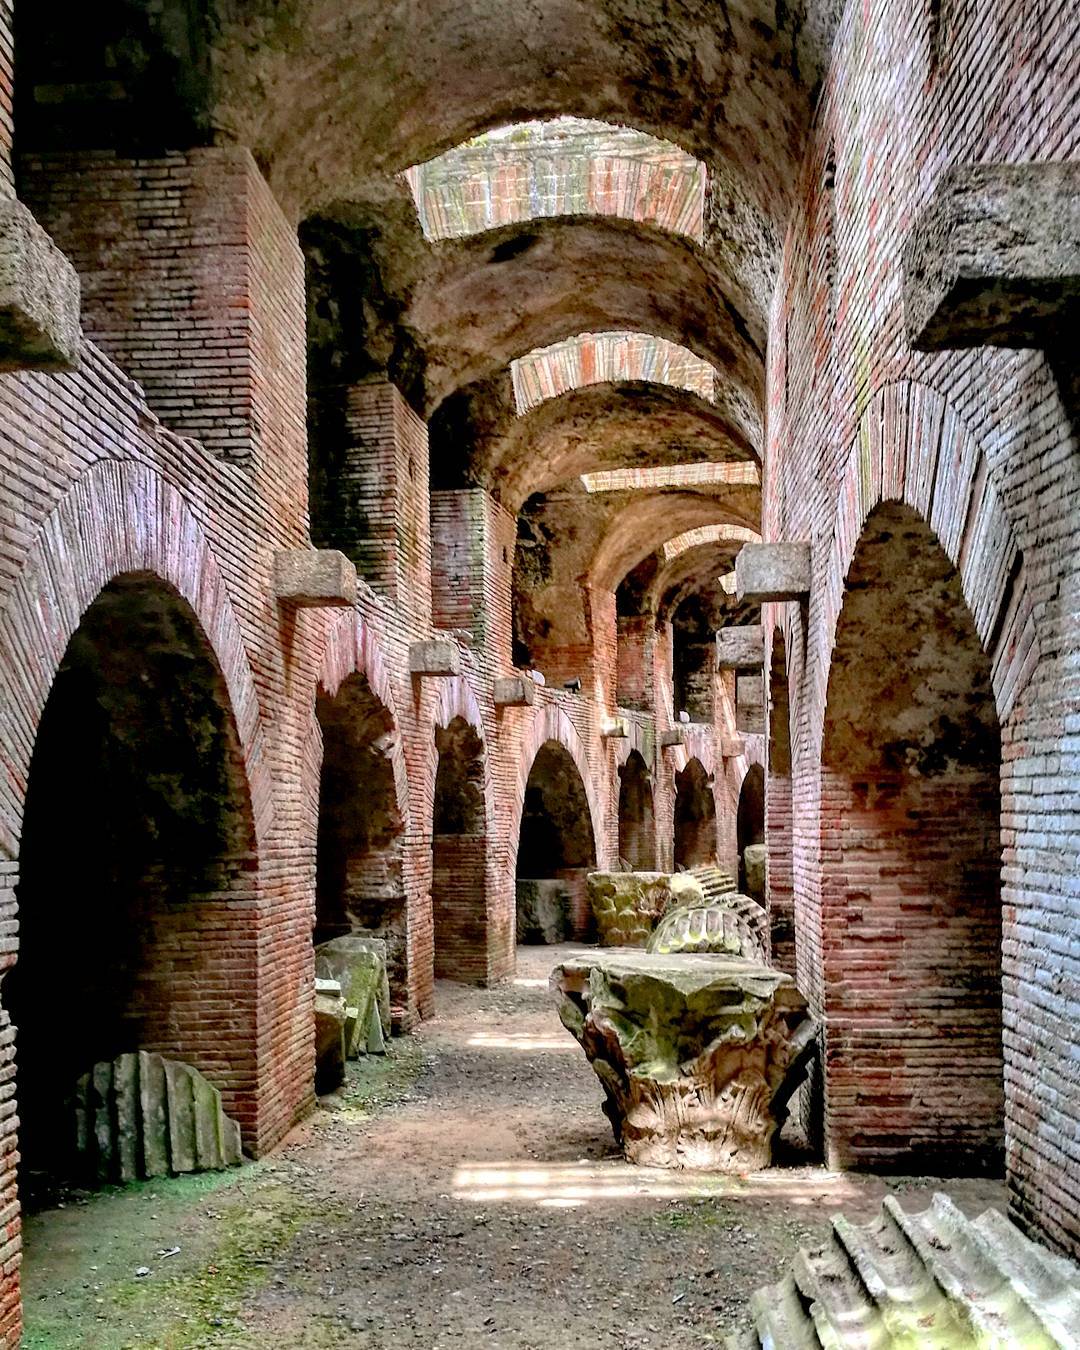 Pozzuoli amphitheater, underground